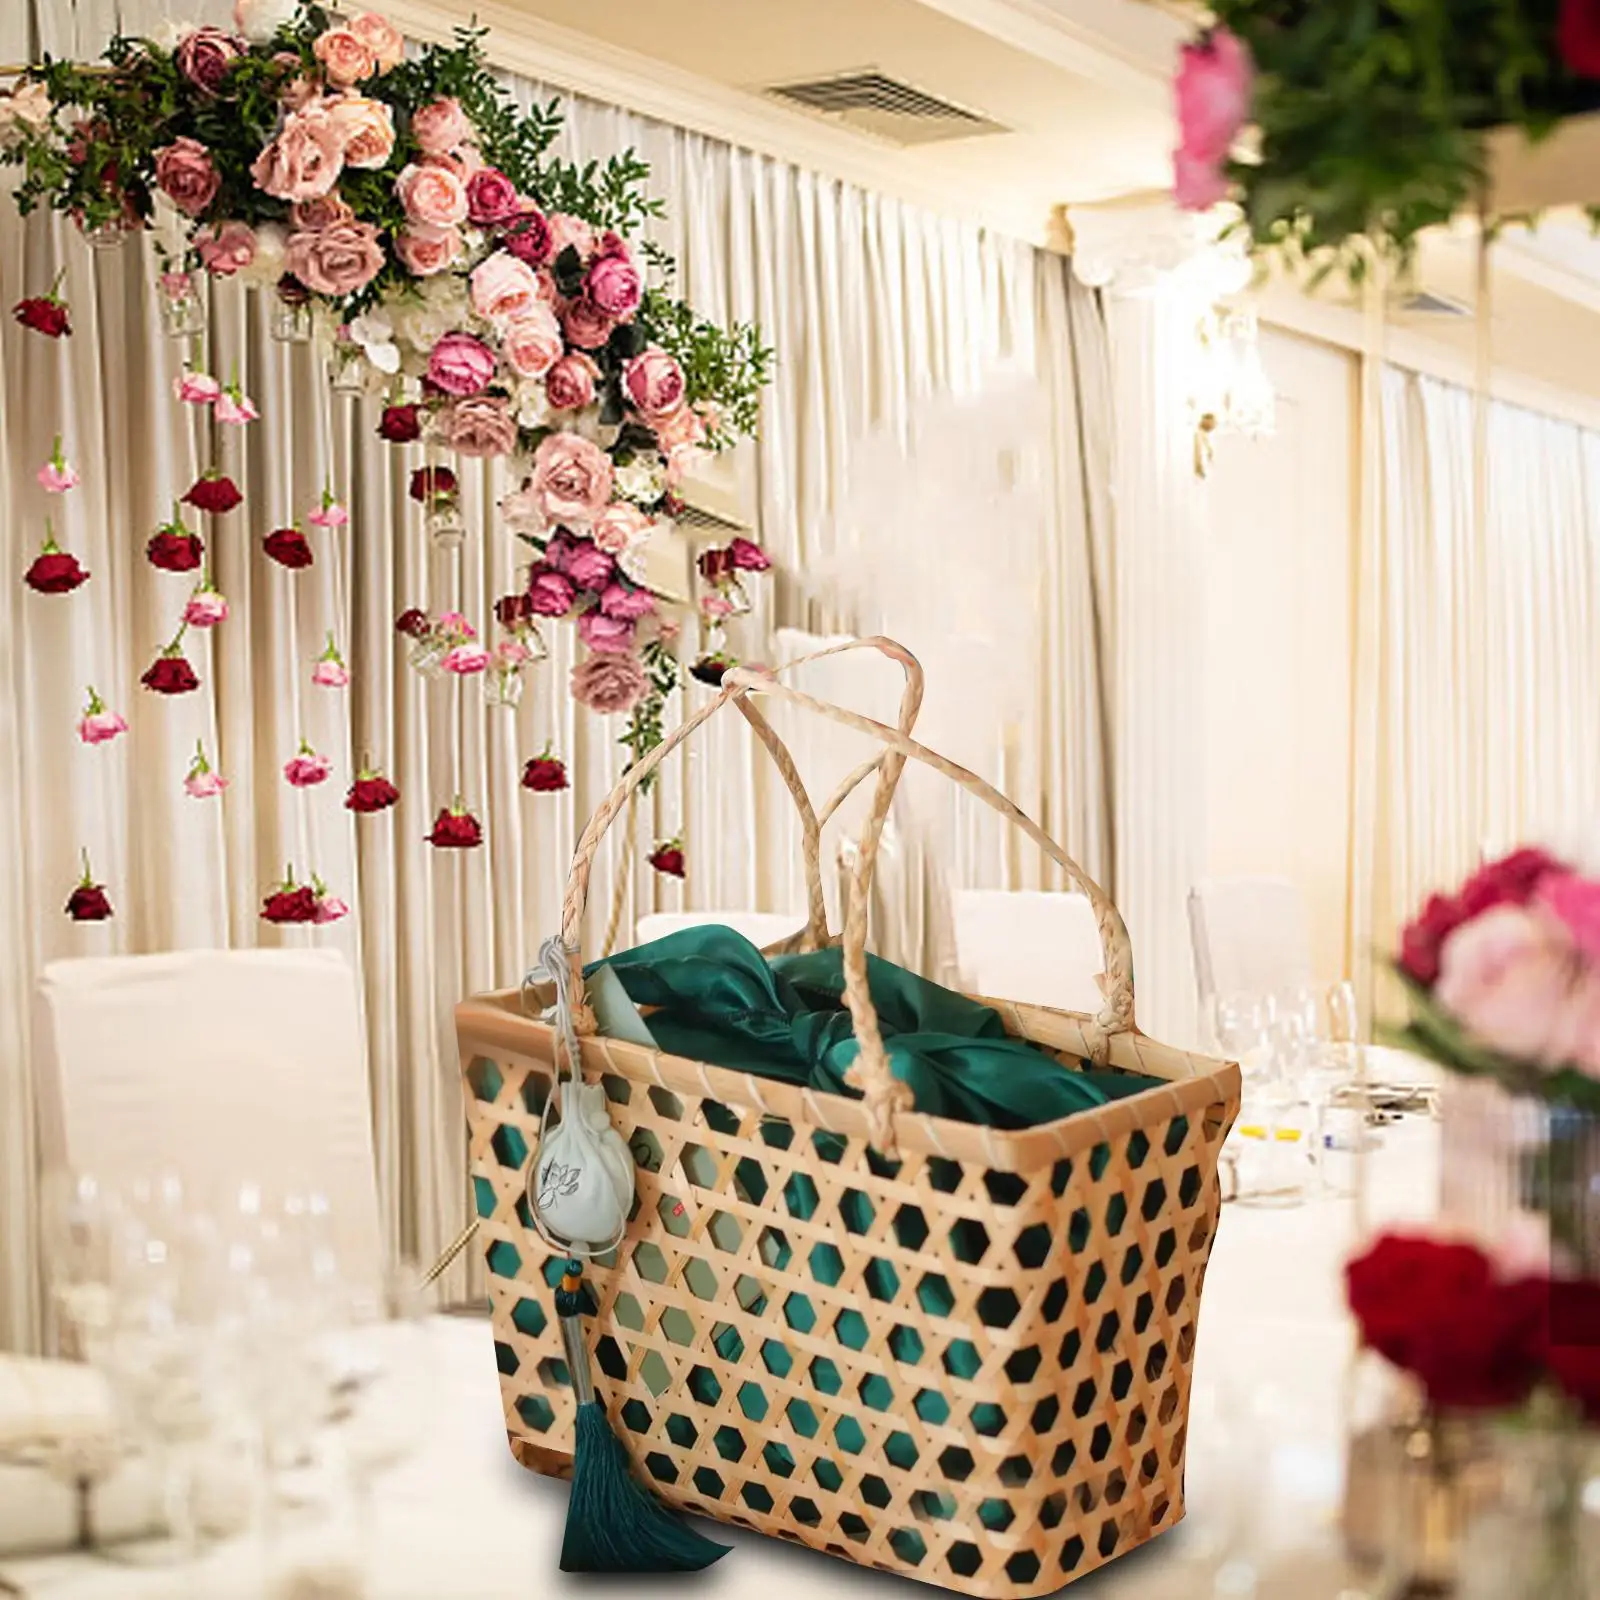 Woven Storage Basket with Handle Decorative Handwoven Rattan Basket Food Storage Container for Wedding Party Flower Arrangement